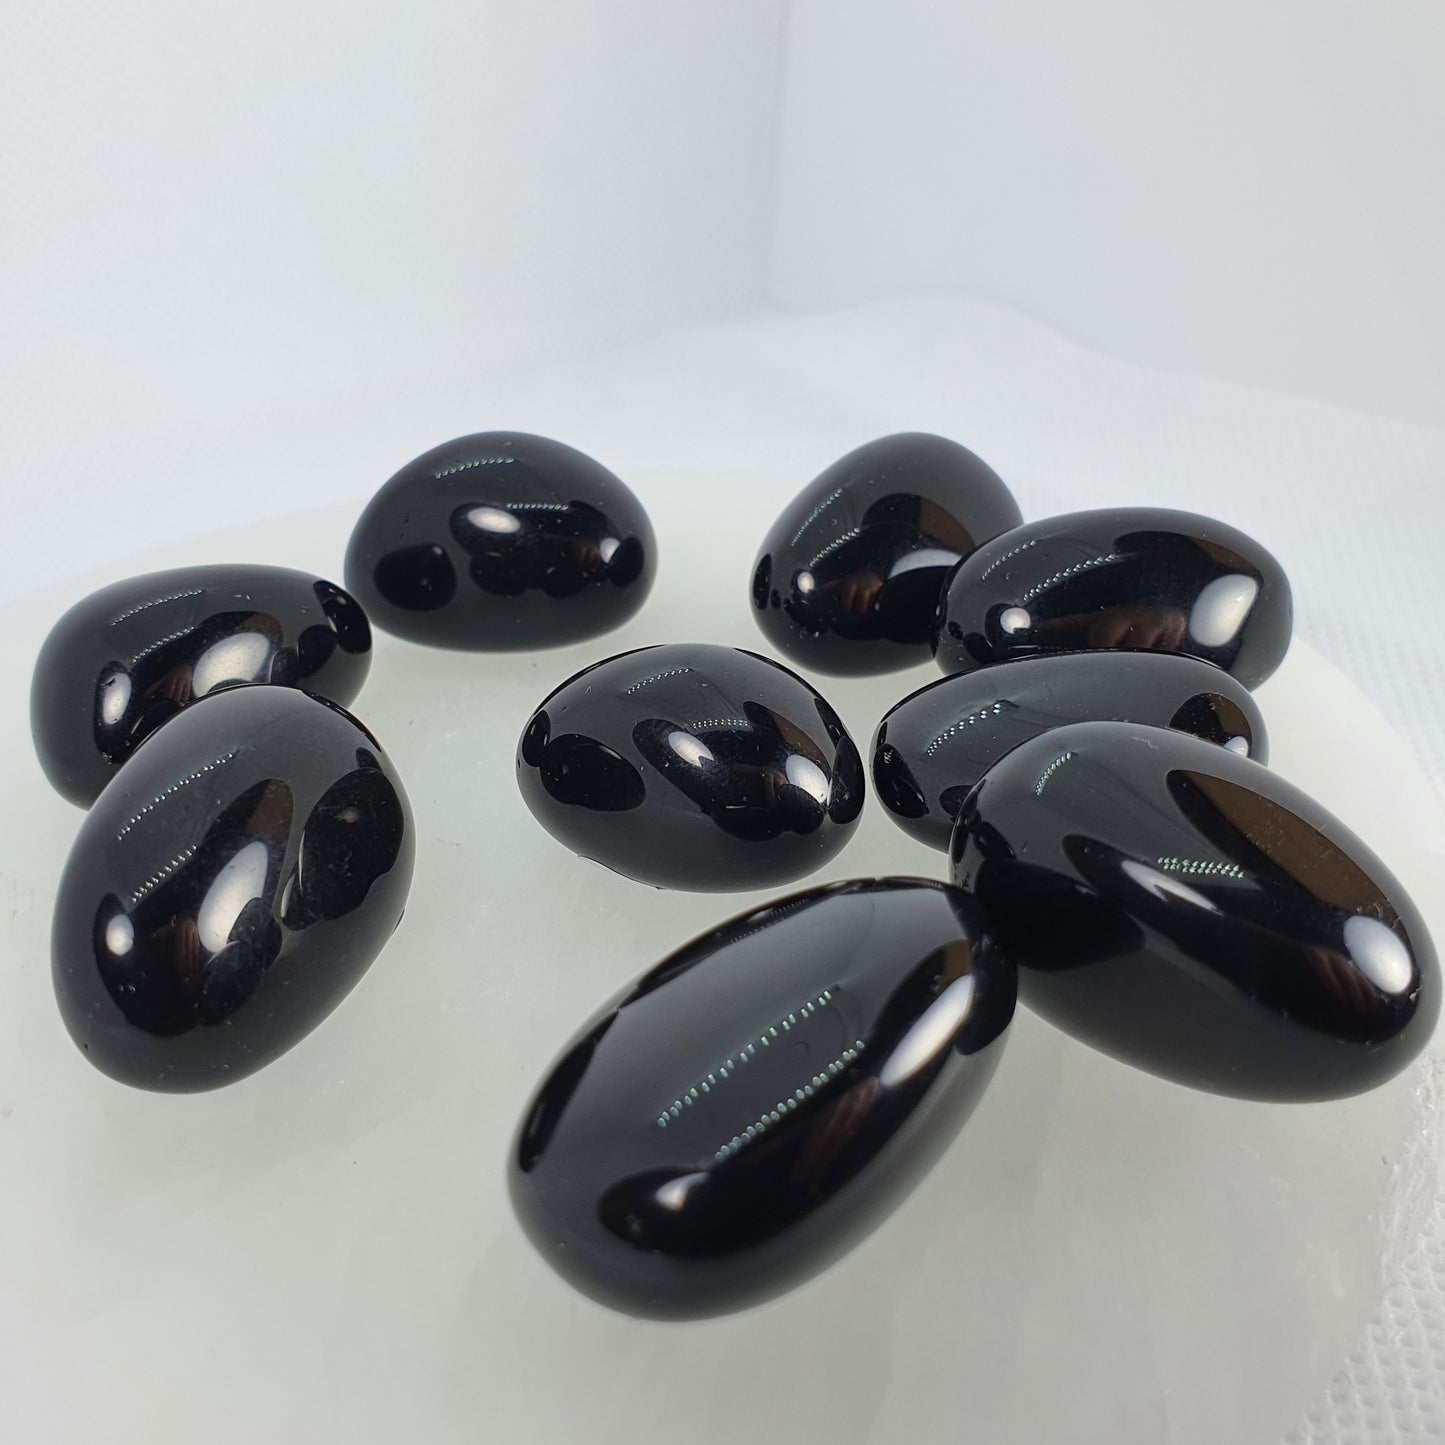 Crystals - Obsidian (Black) Tumbled Stone